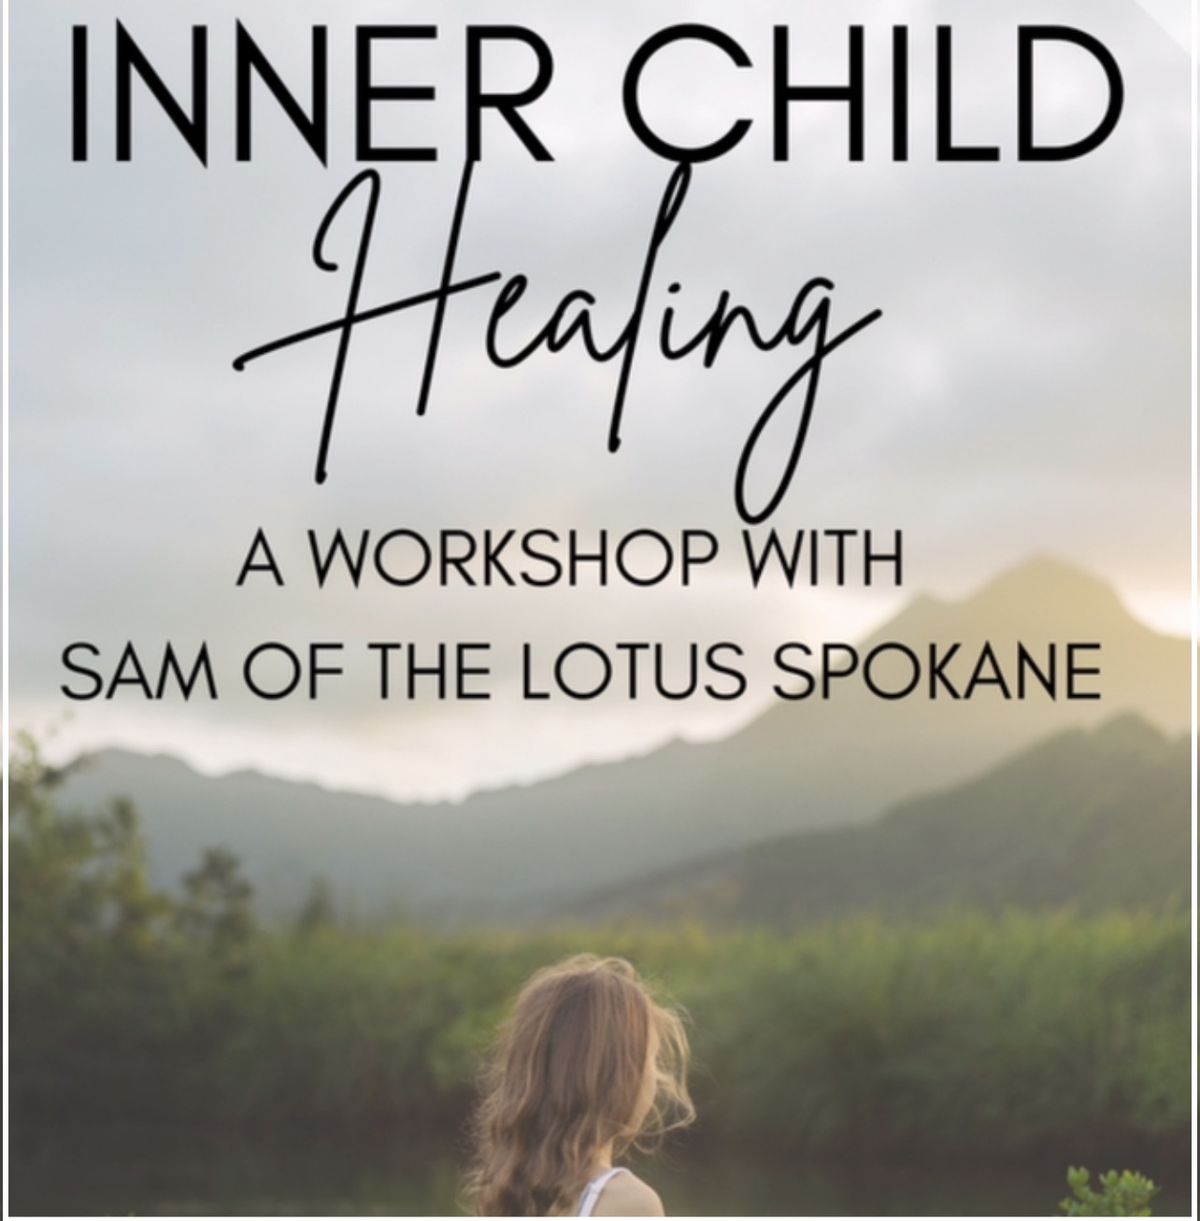 Inner Child Healing with Sam Bryen of The Lotus Spokane 